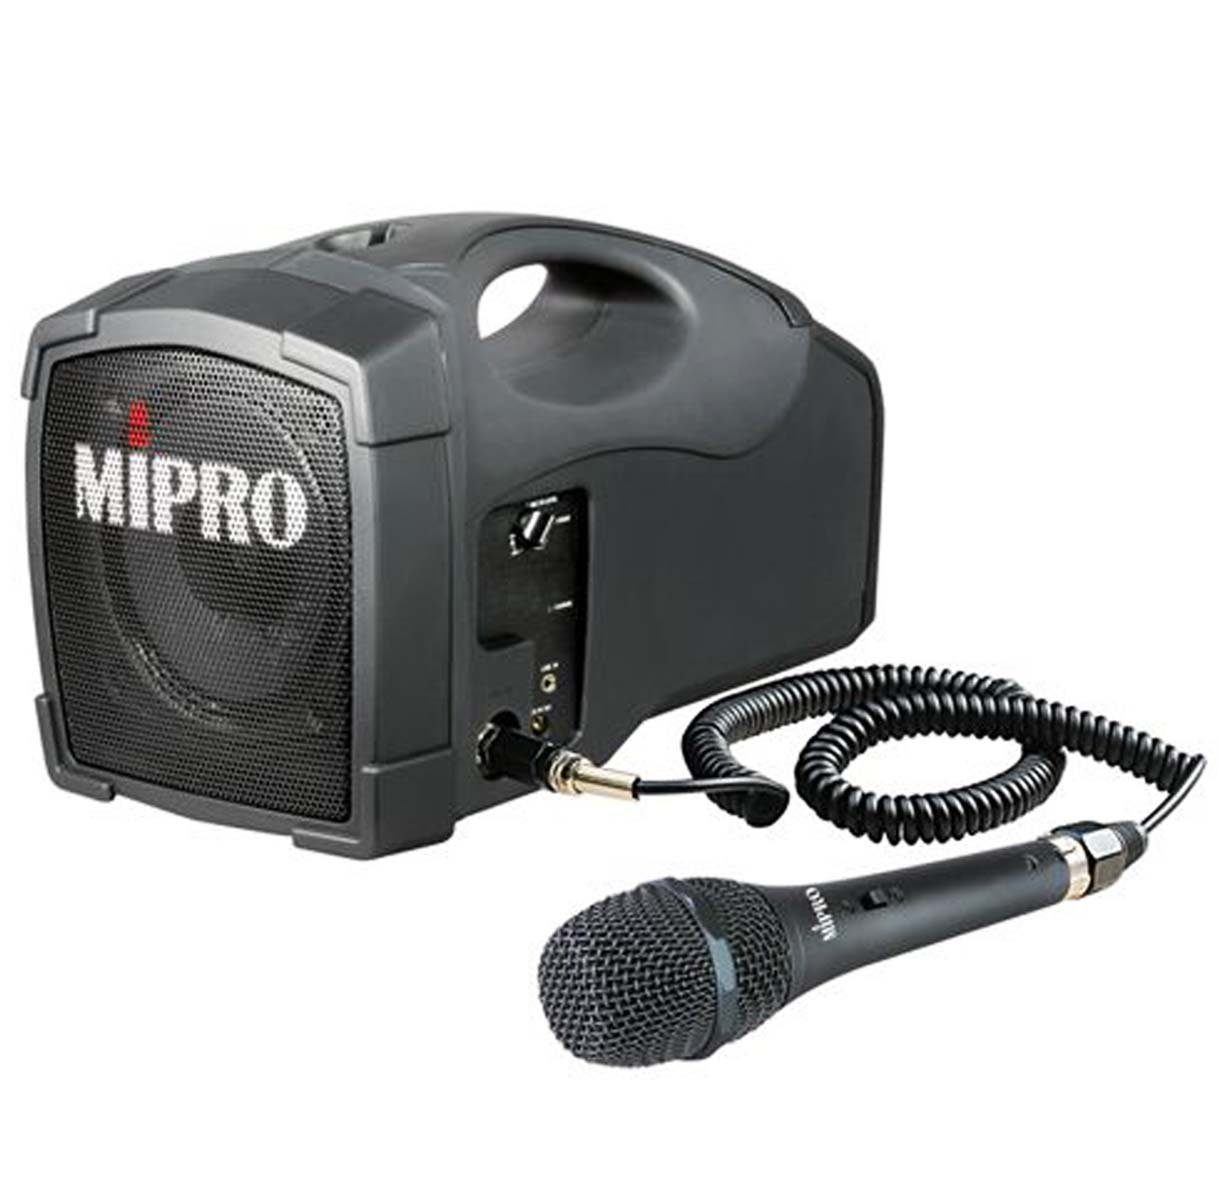 W) Audio Mikrofon MA-101C 27 inkl. Mipro Lautsprechersystem (Kabelgebunden, Lautsprechersystem